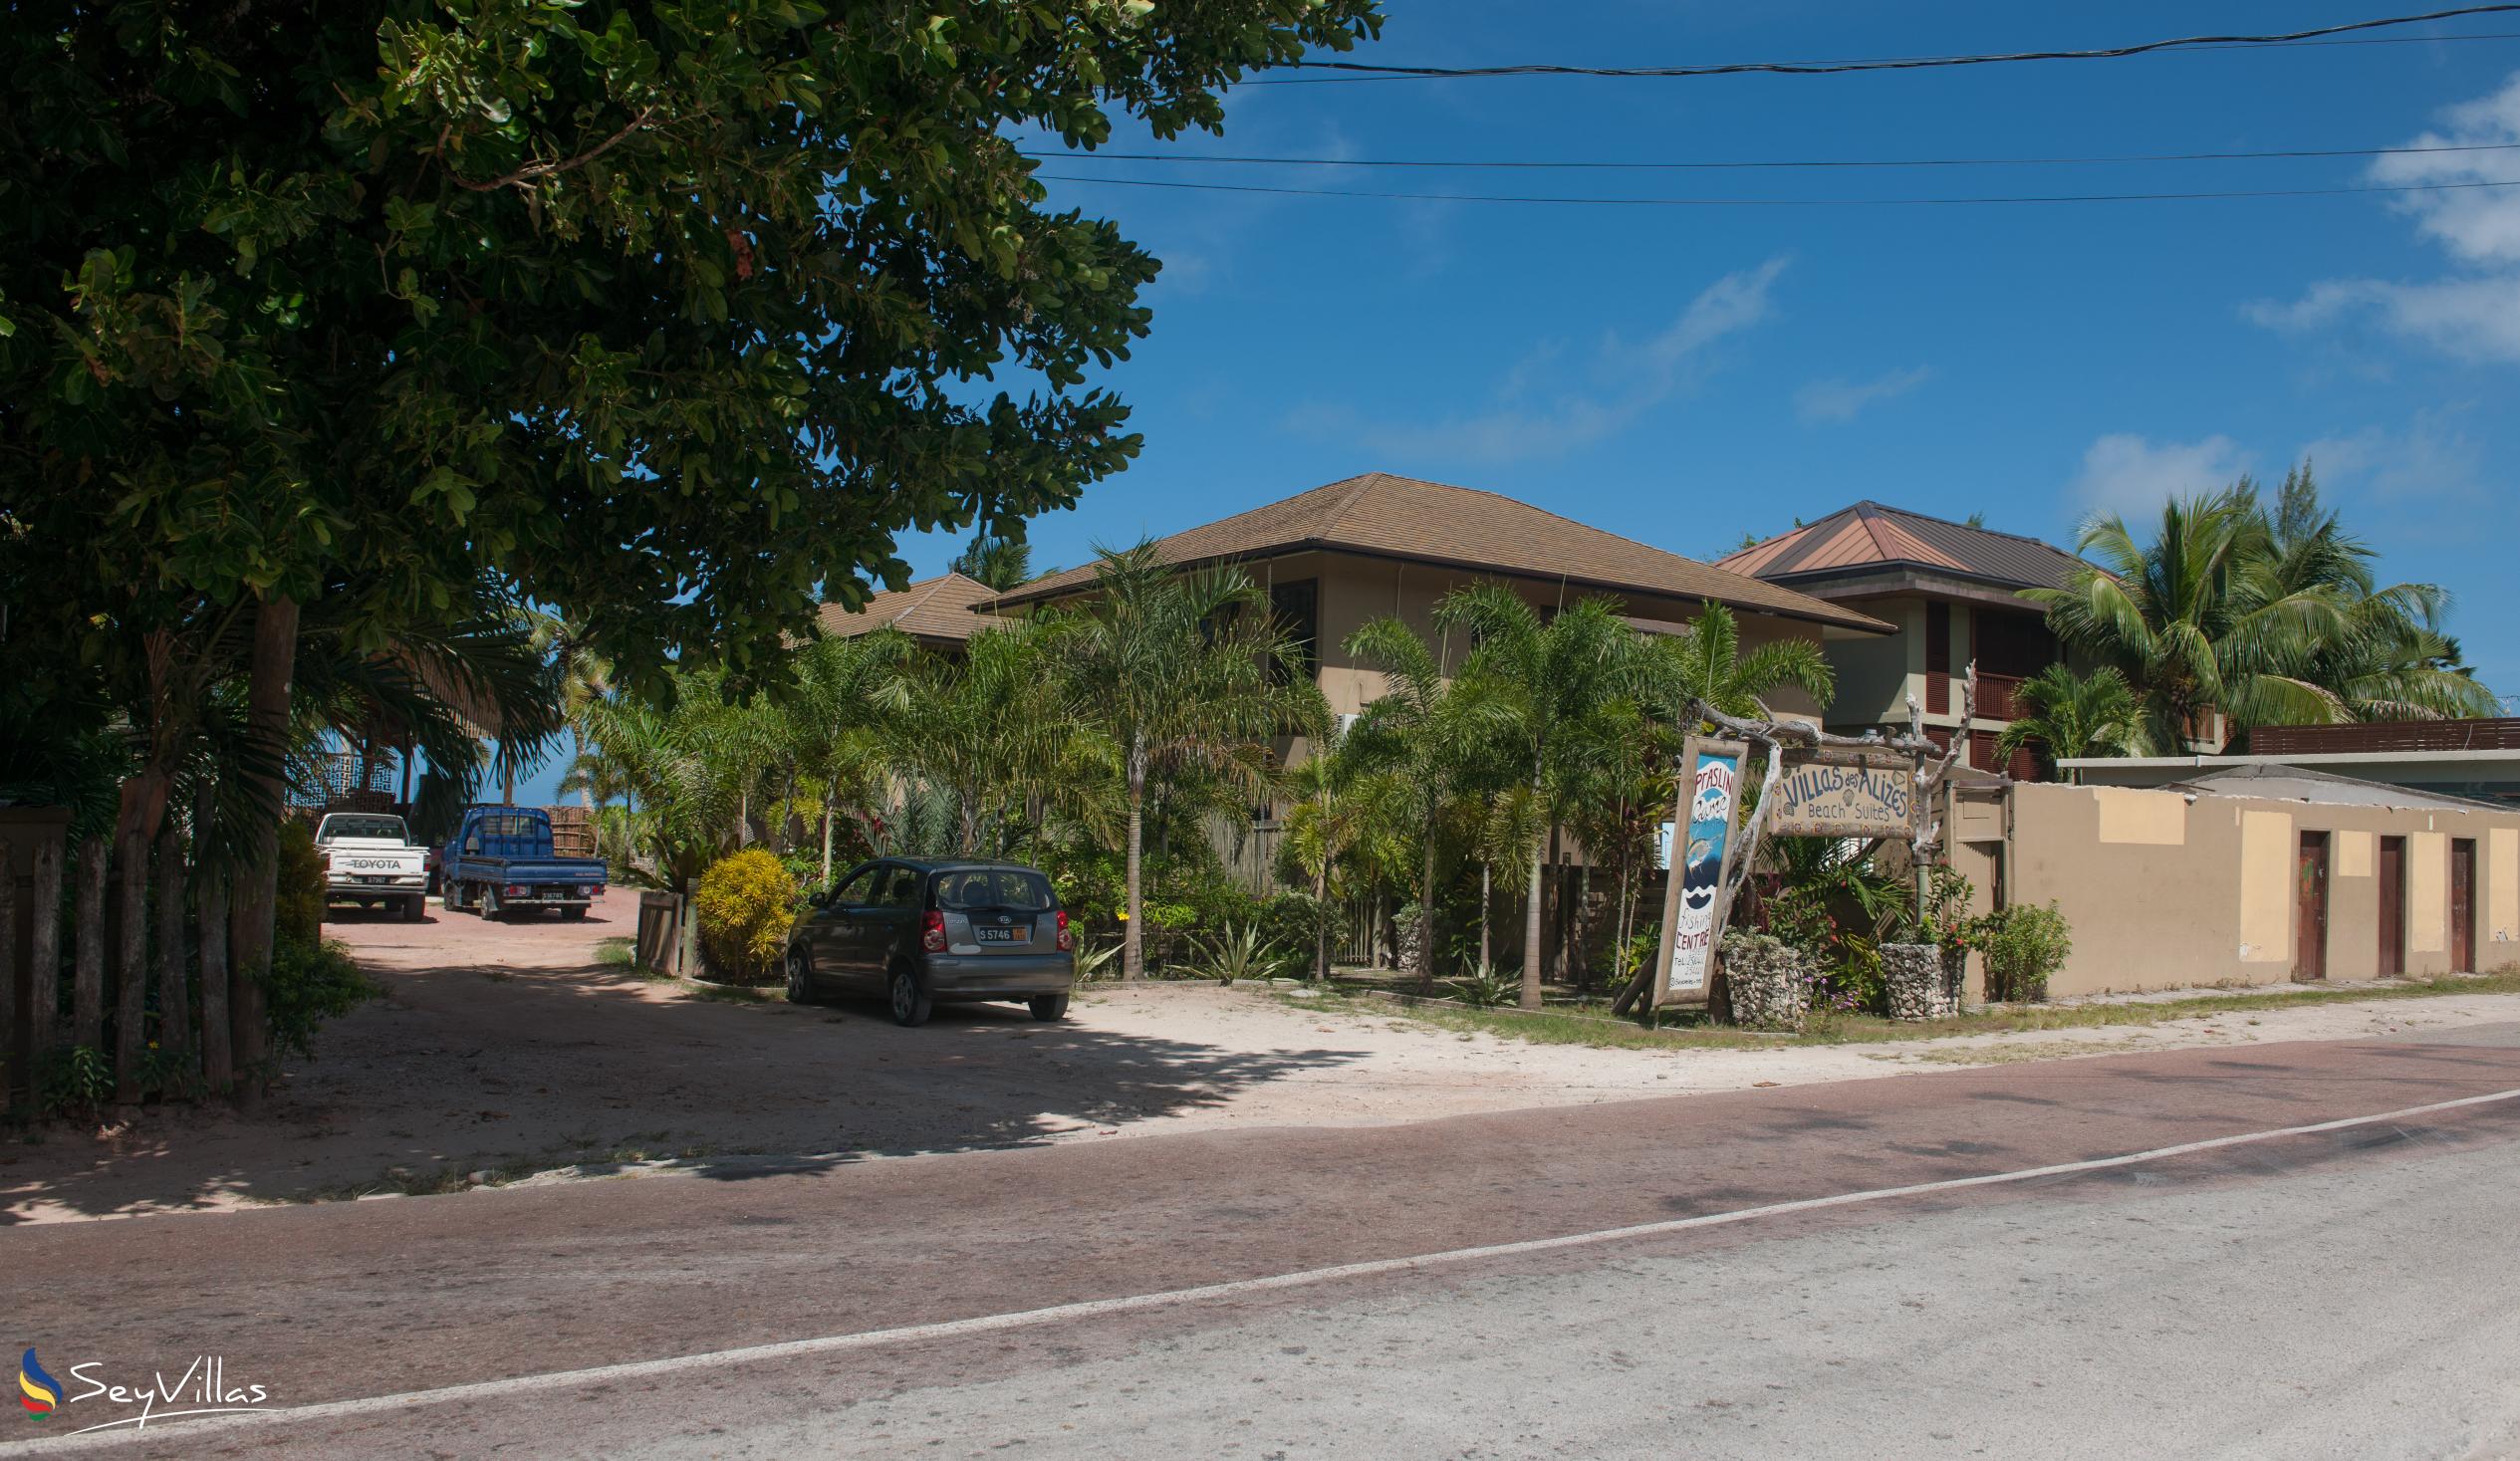 Foto 42: Villas des Alizes - Posizione - Praslin (Seychelles)